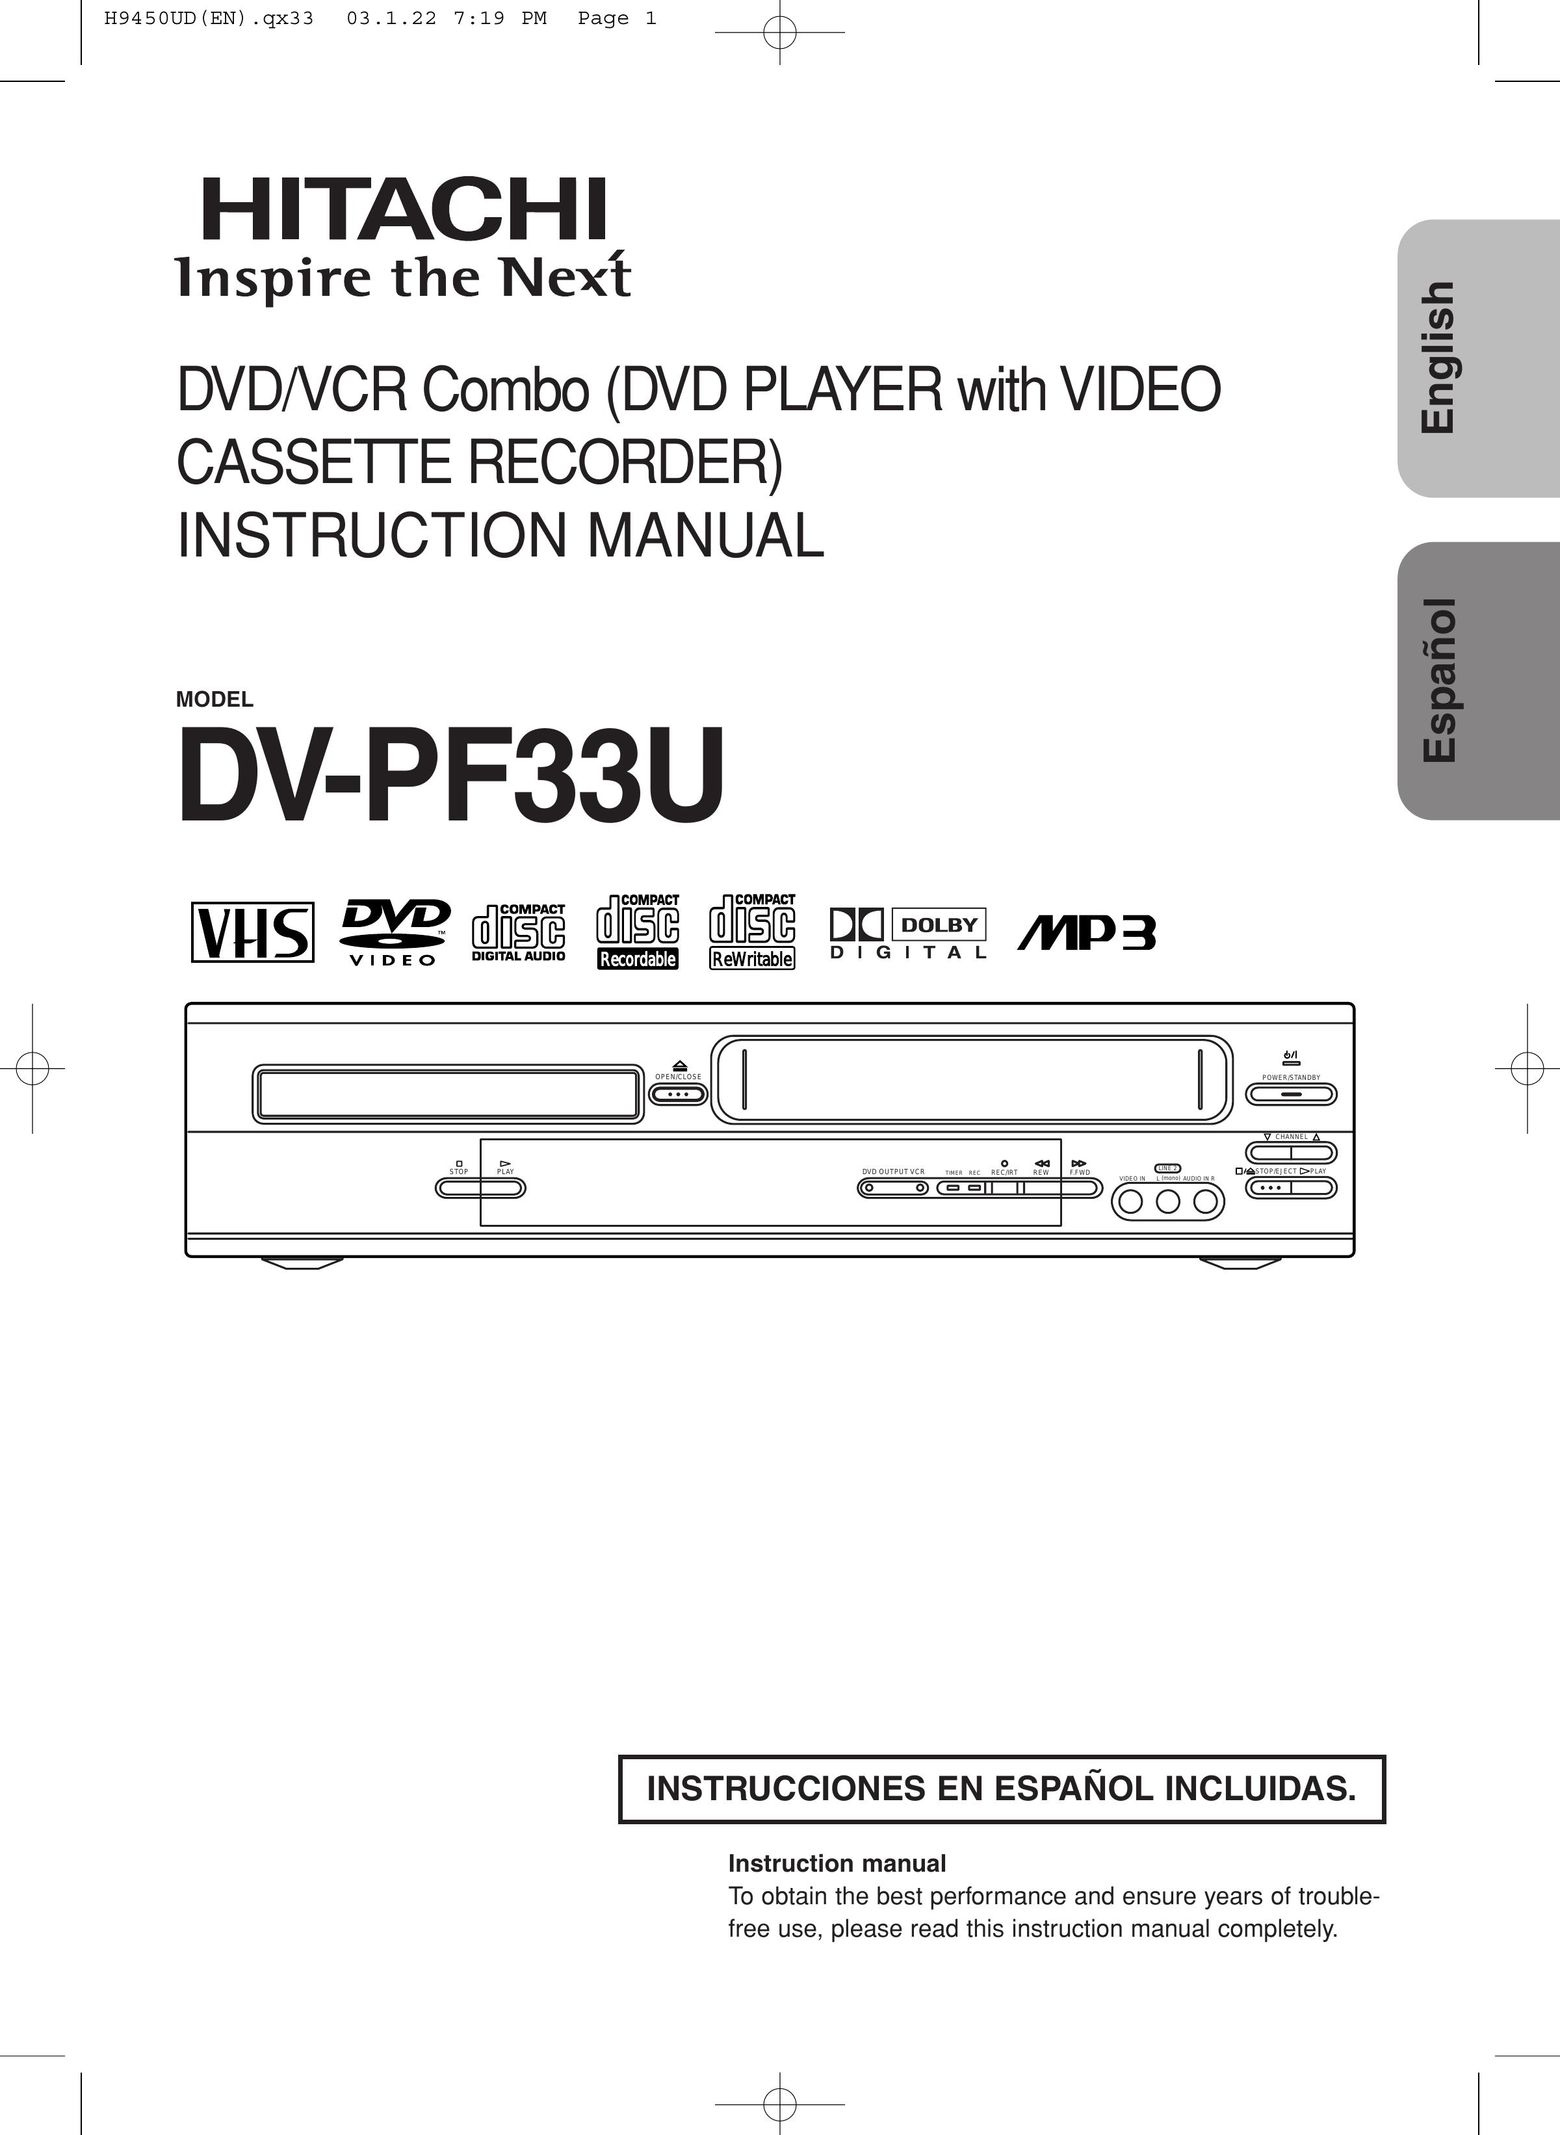 Hitachi DV-PF33U DVD VCR Combo User Manual